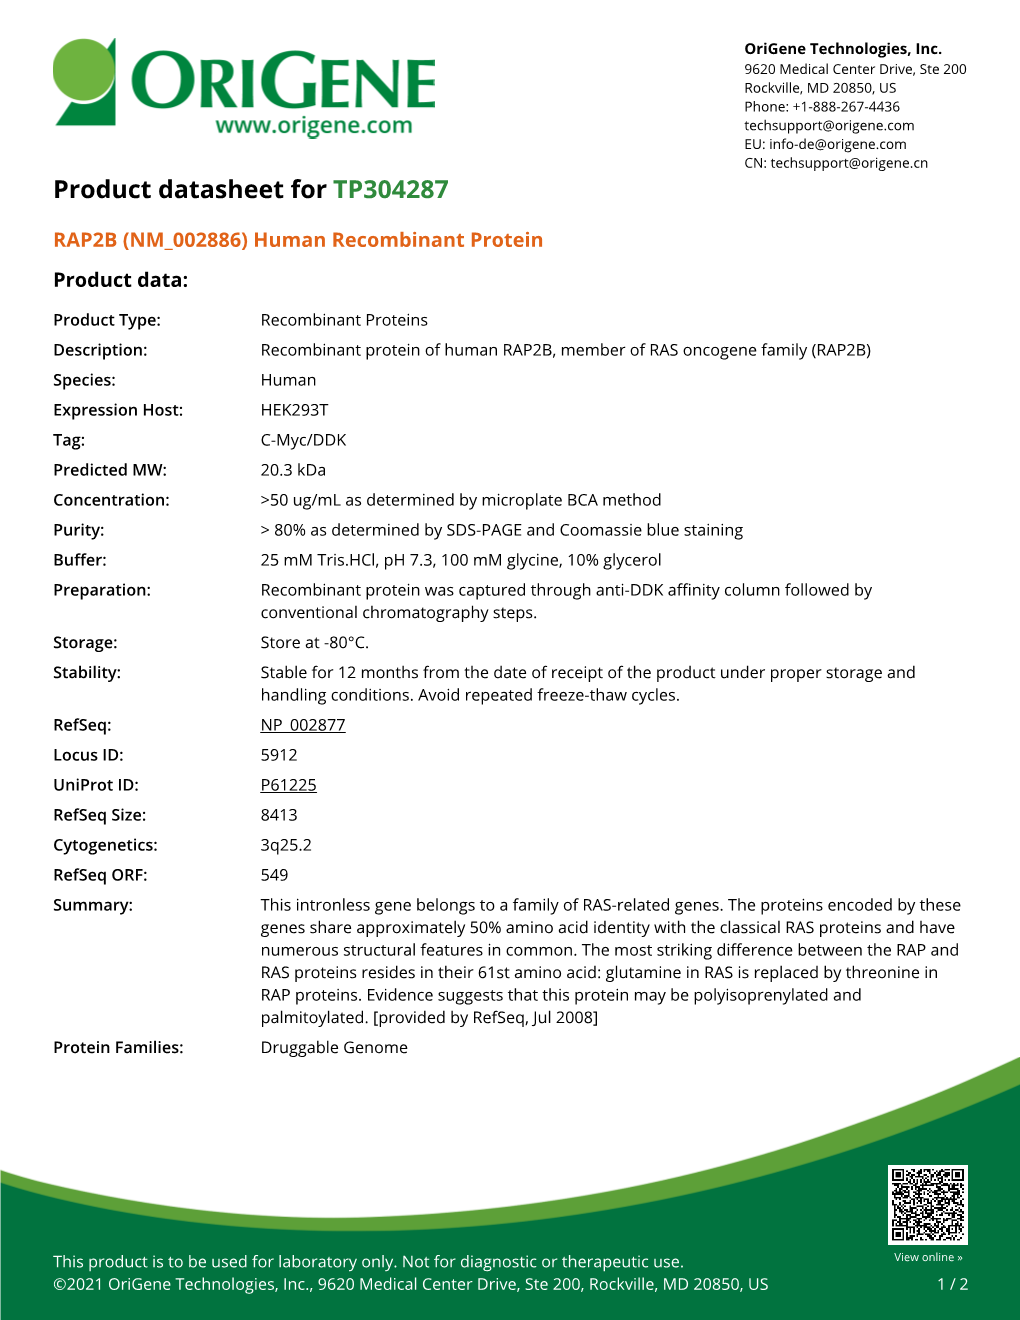 RAP2B (NM 002886) Human Recombinant Protein – TP304287 | Origene